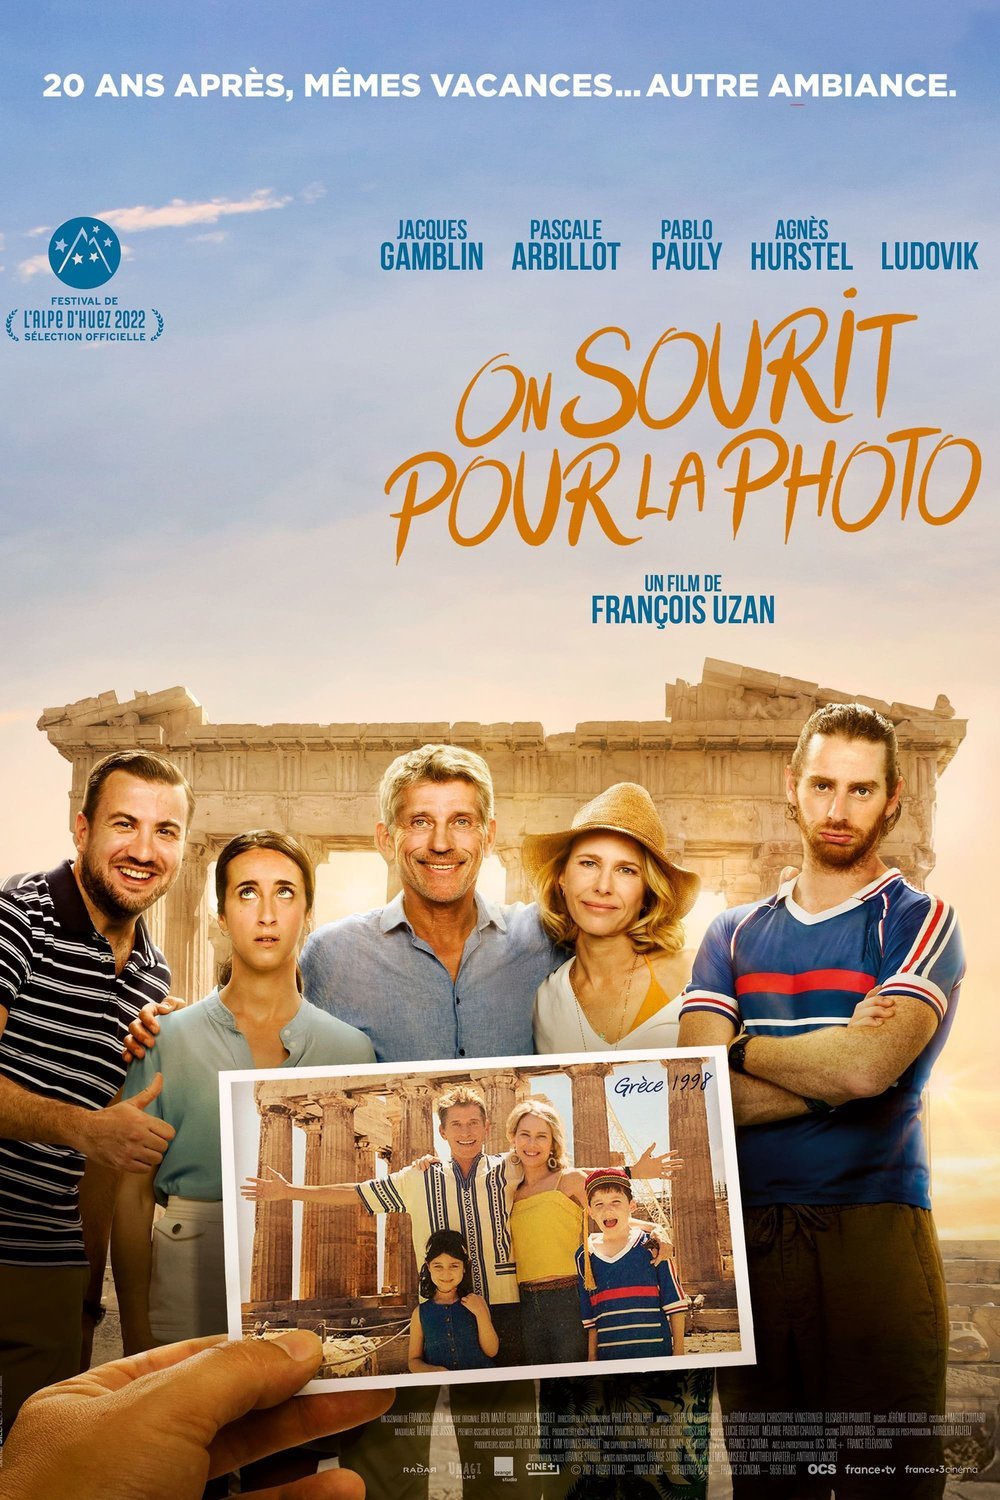 Poster of the movie On sourit pour la photo